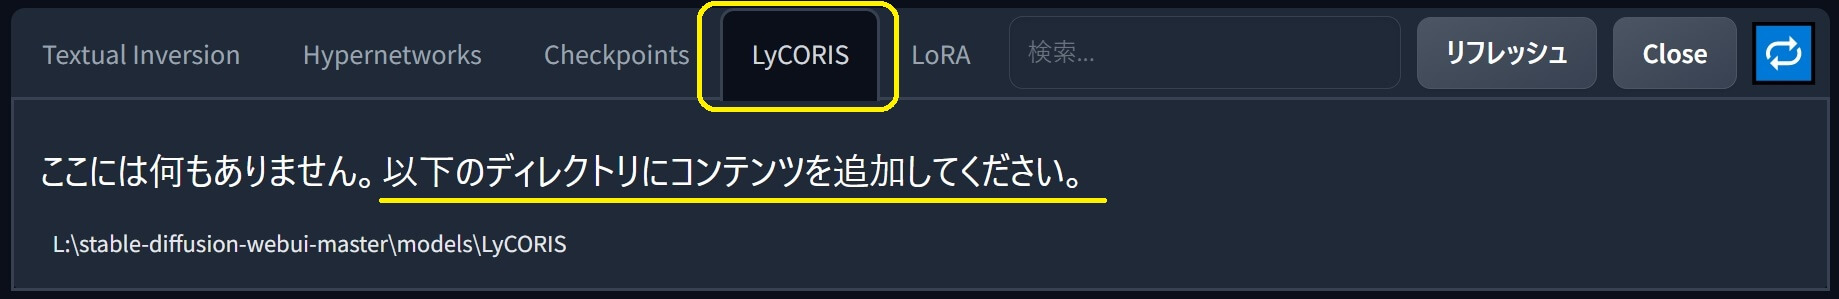 LyCORIS-UI-001a